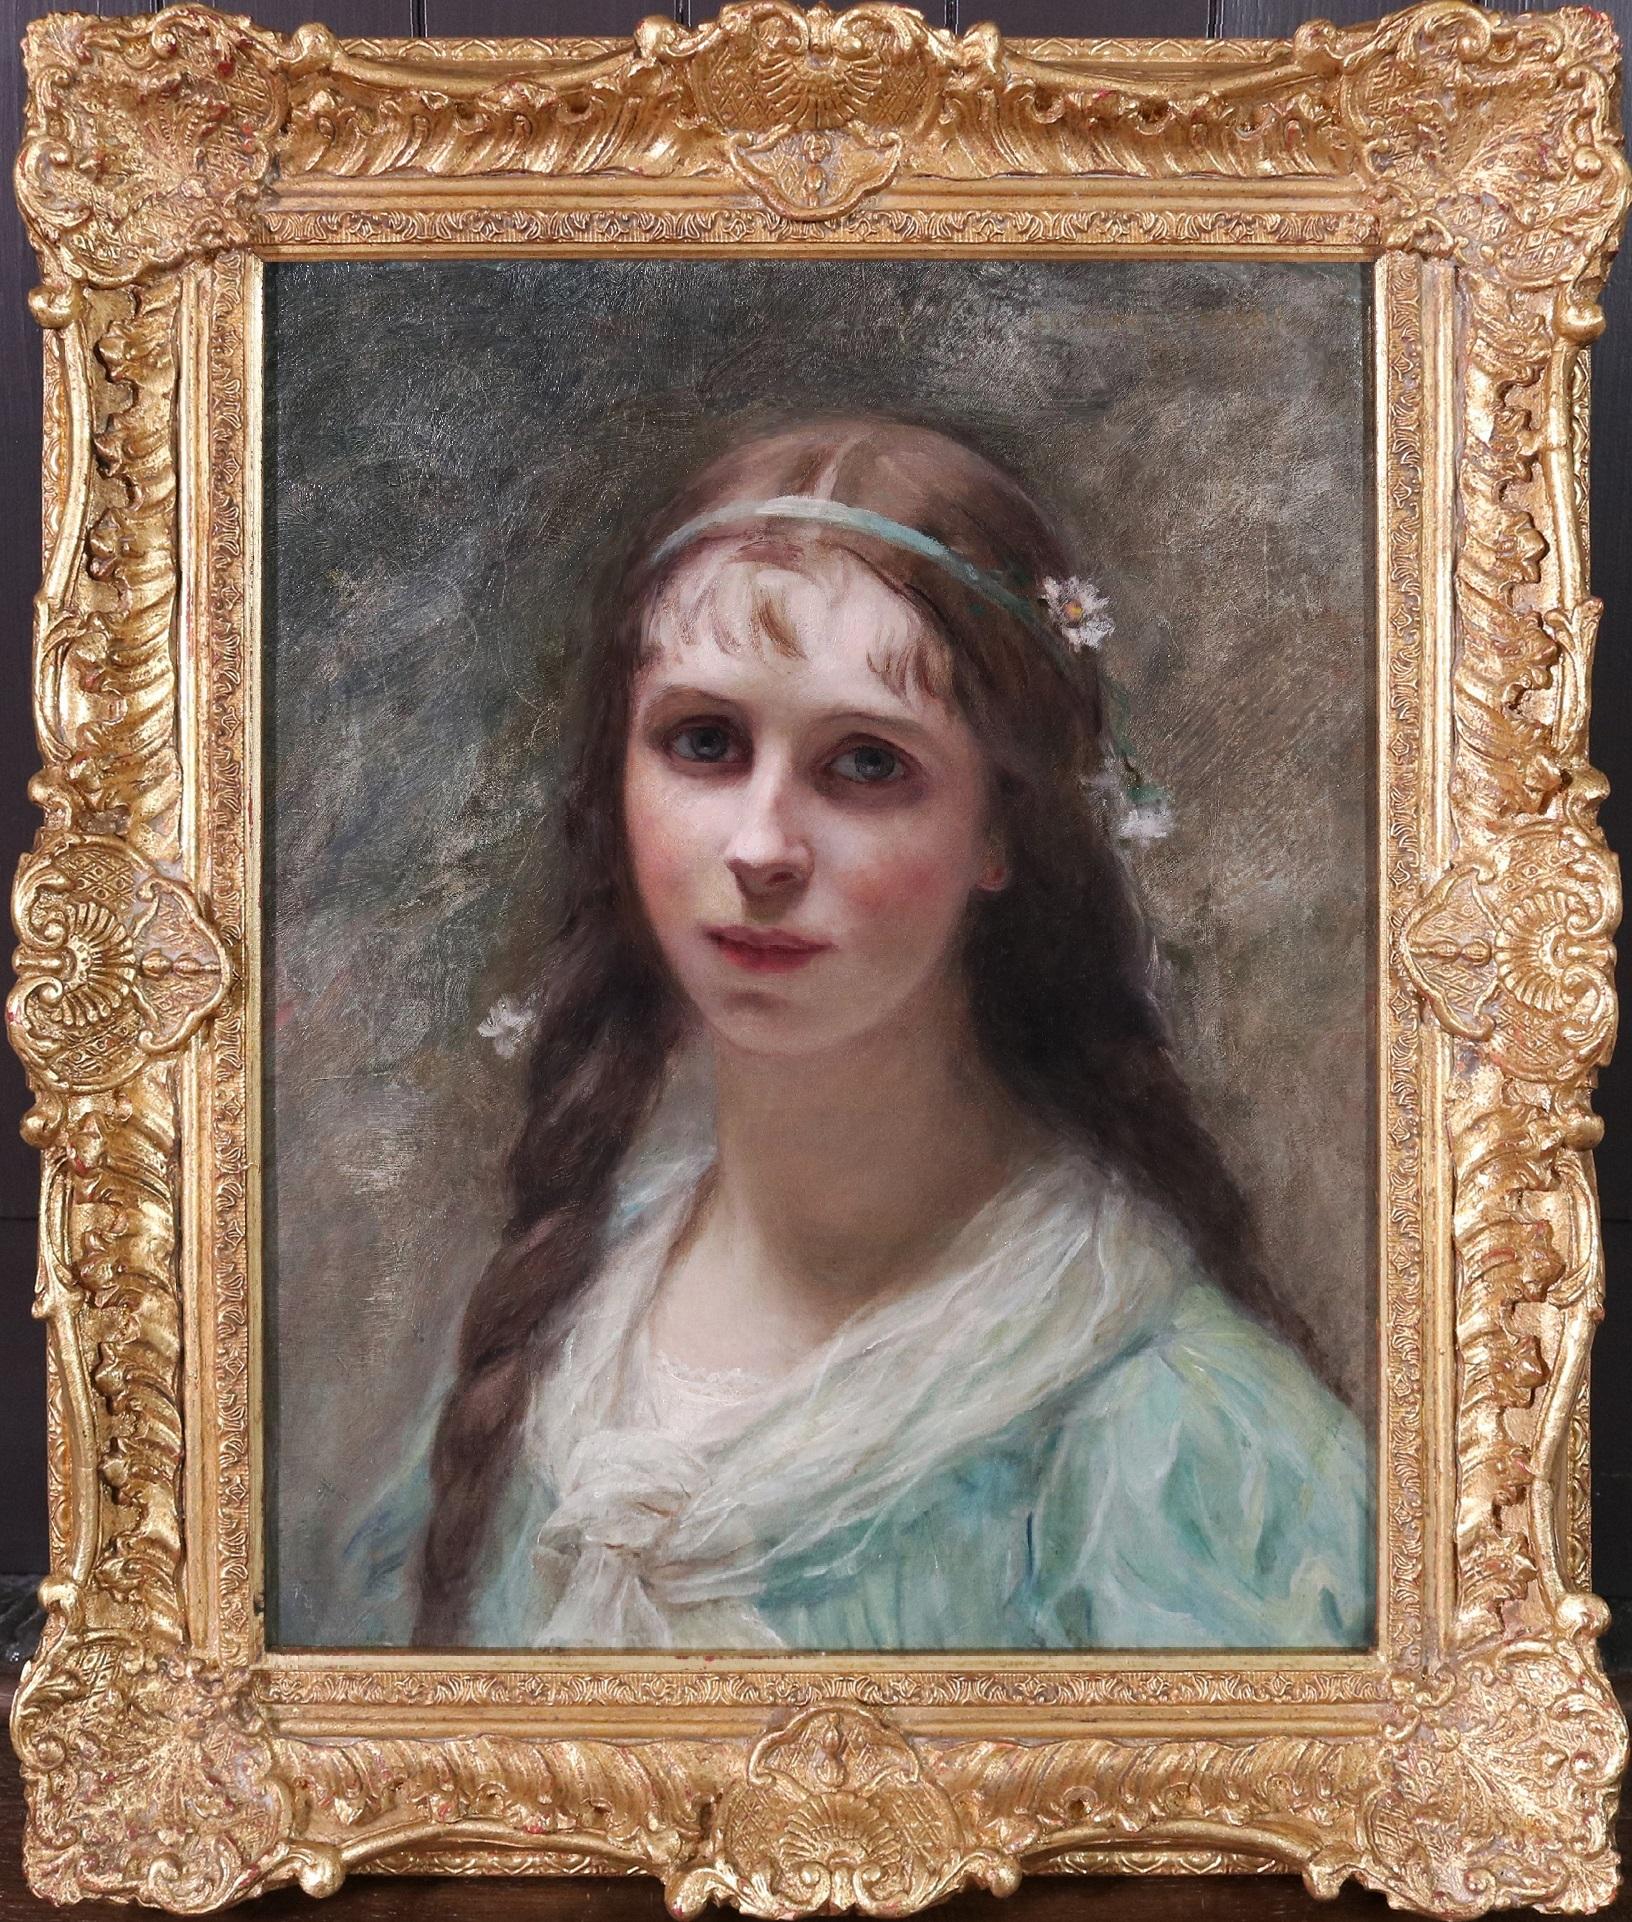 Couronne de Marguerite - Französisches Belle Epoque Portrait Ölgemälde von Pariser Mädchen – Painting von Édouard-Louis-Lucien Cabane